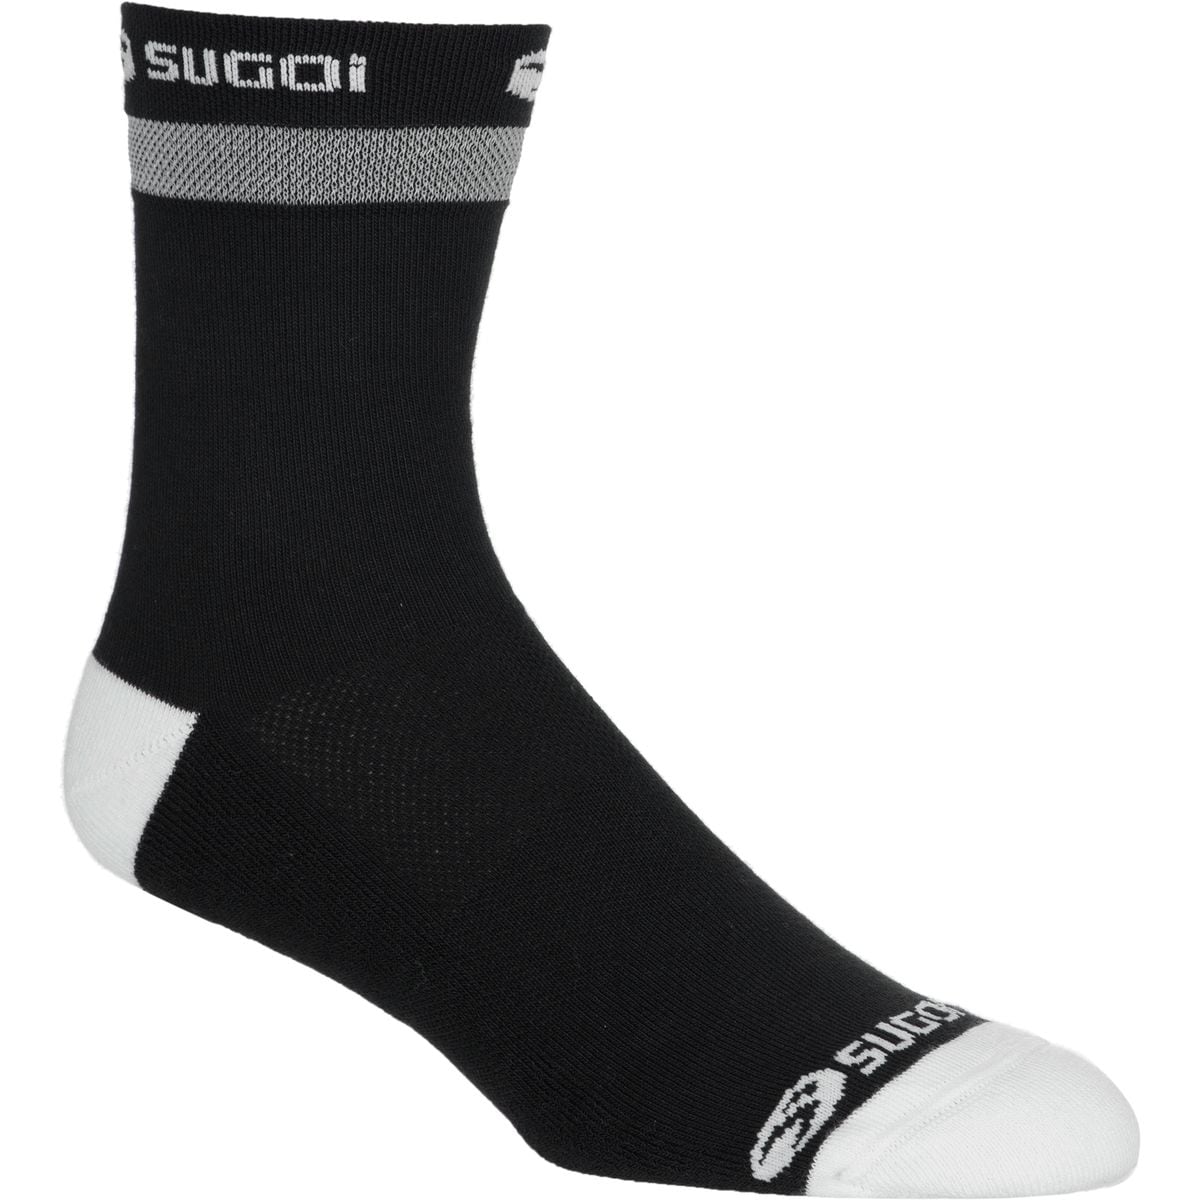 SUGOi Zap Winter Sock Men's